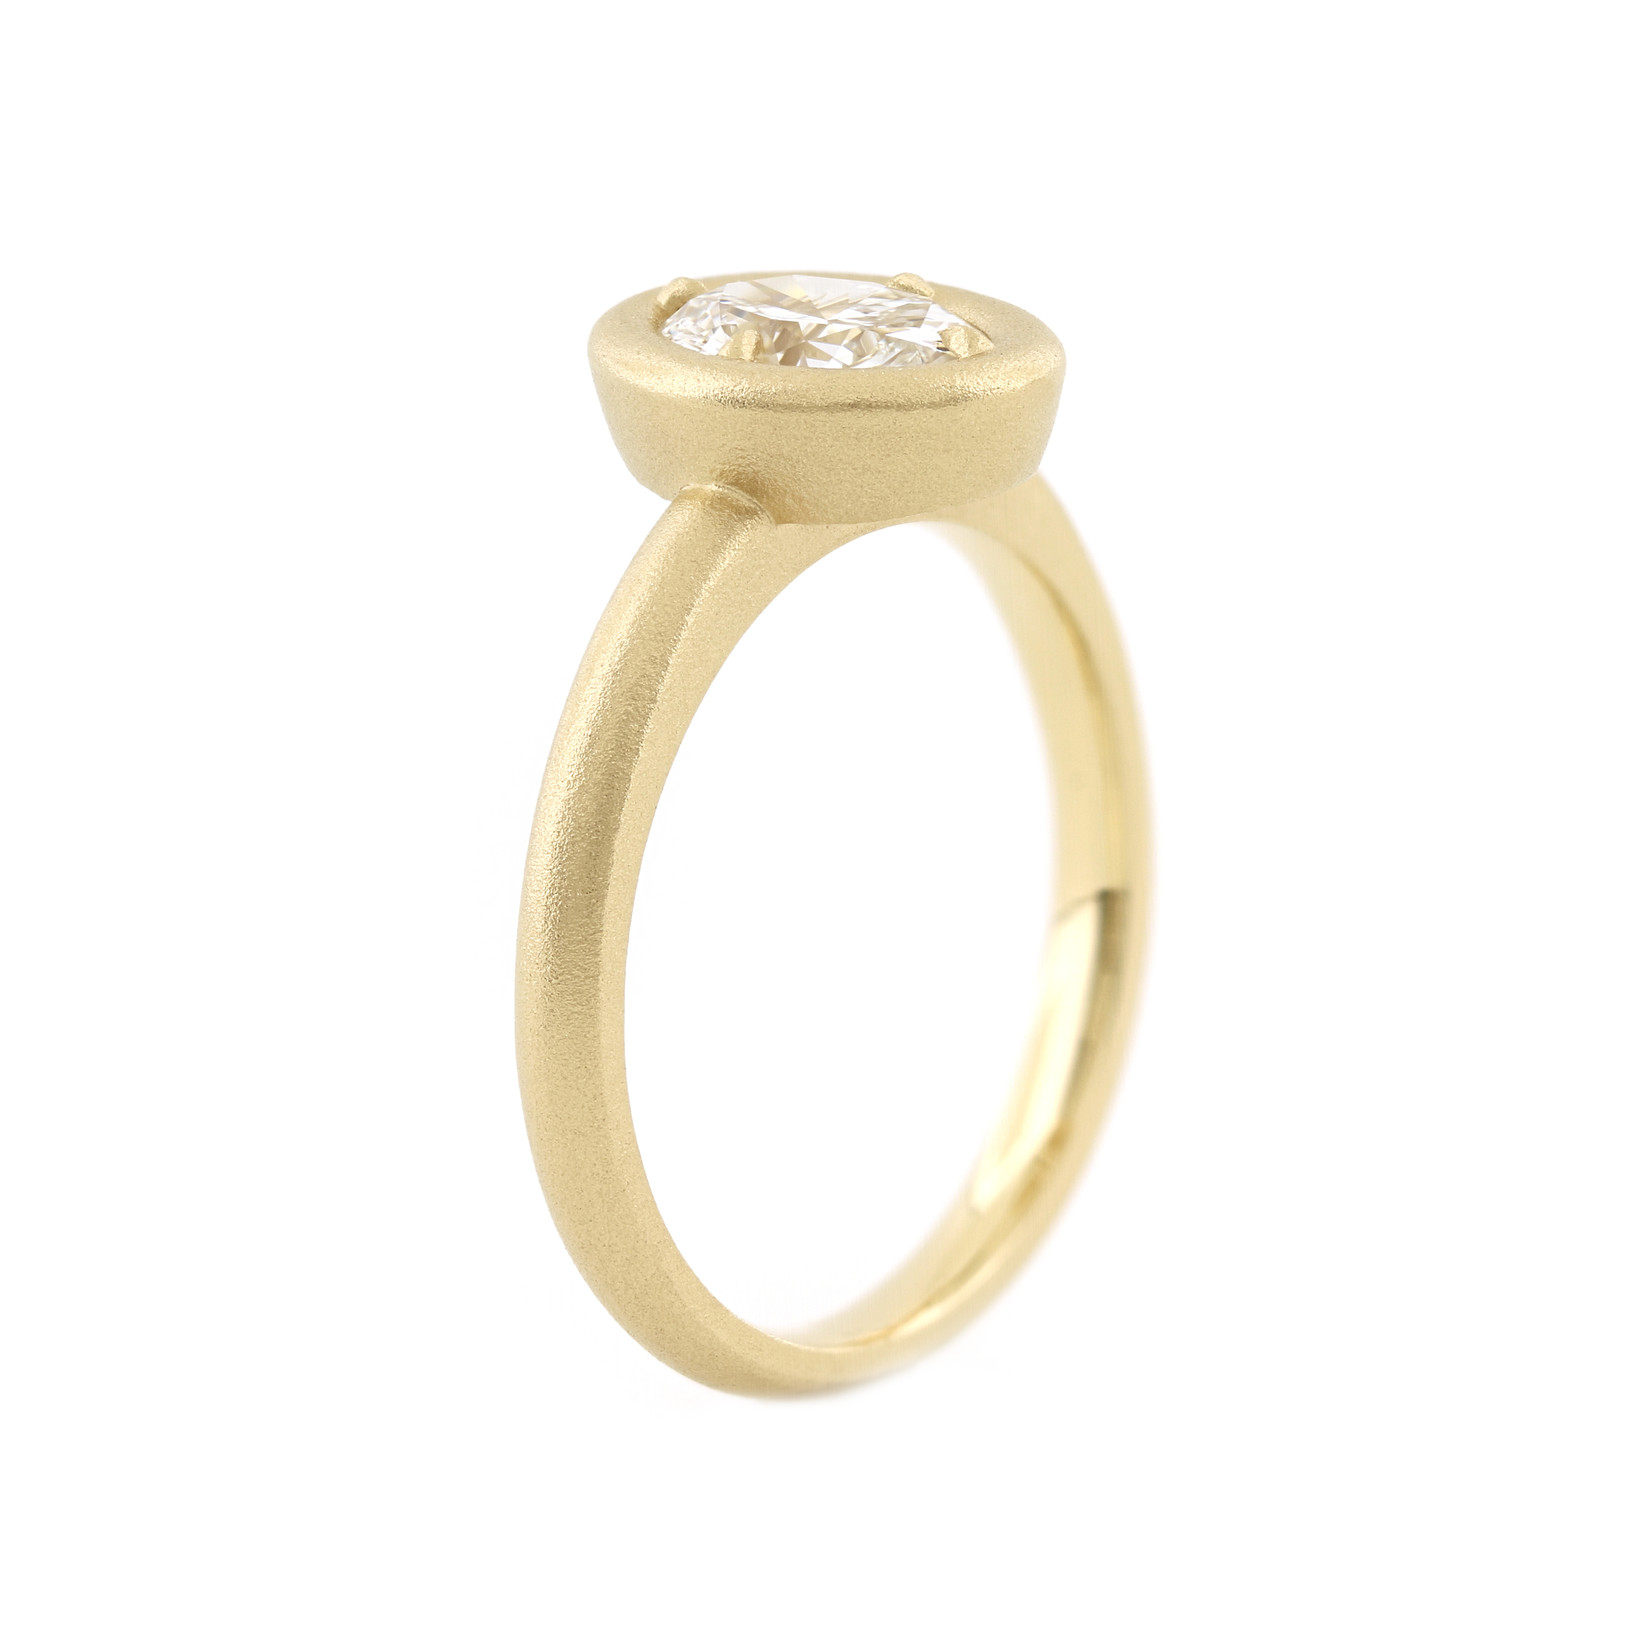 Baxter Moerman Anika Ring with Oval Diamond